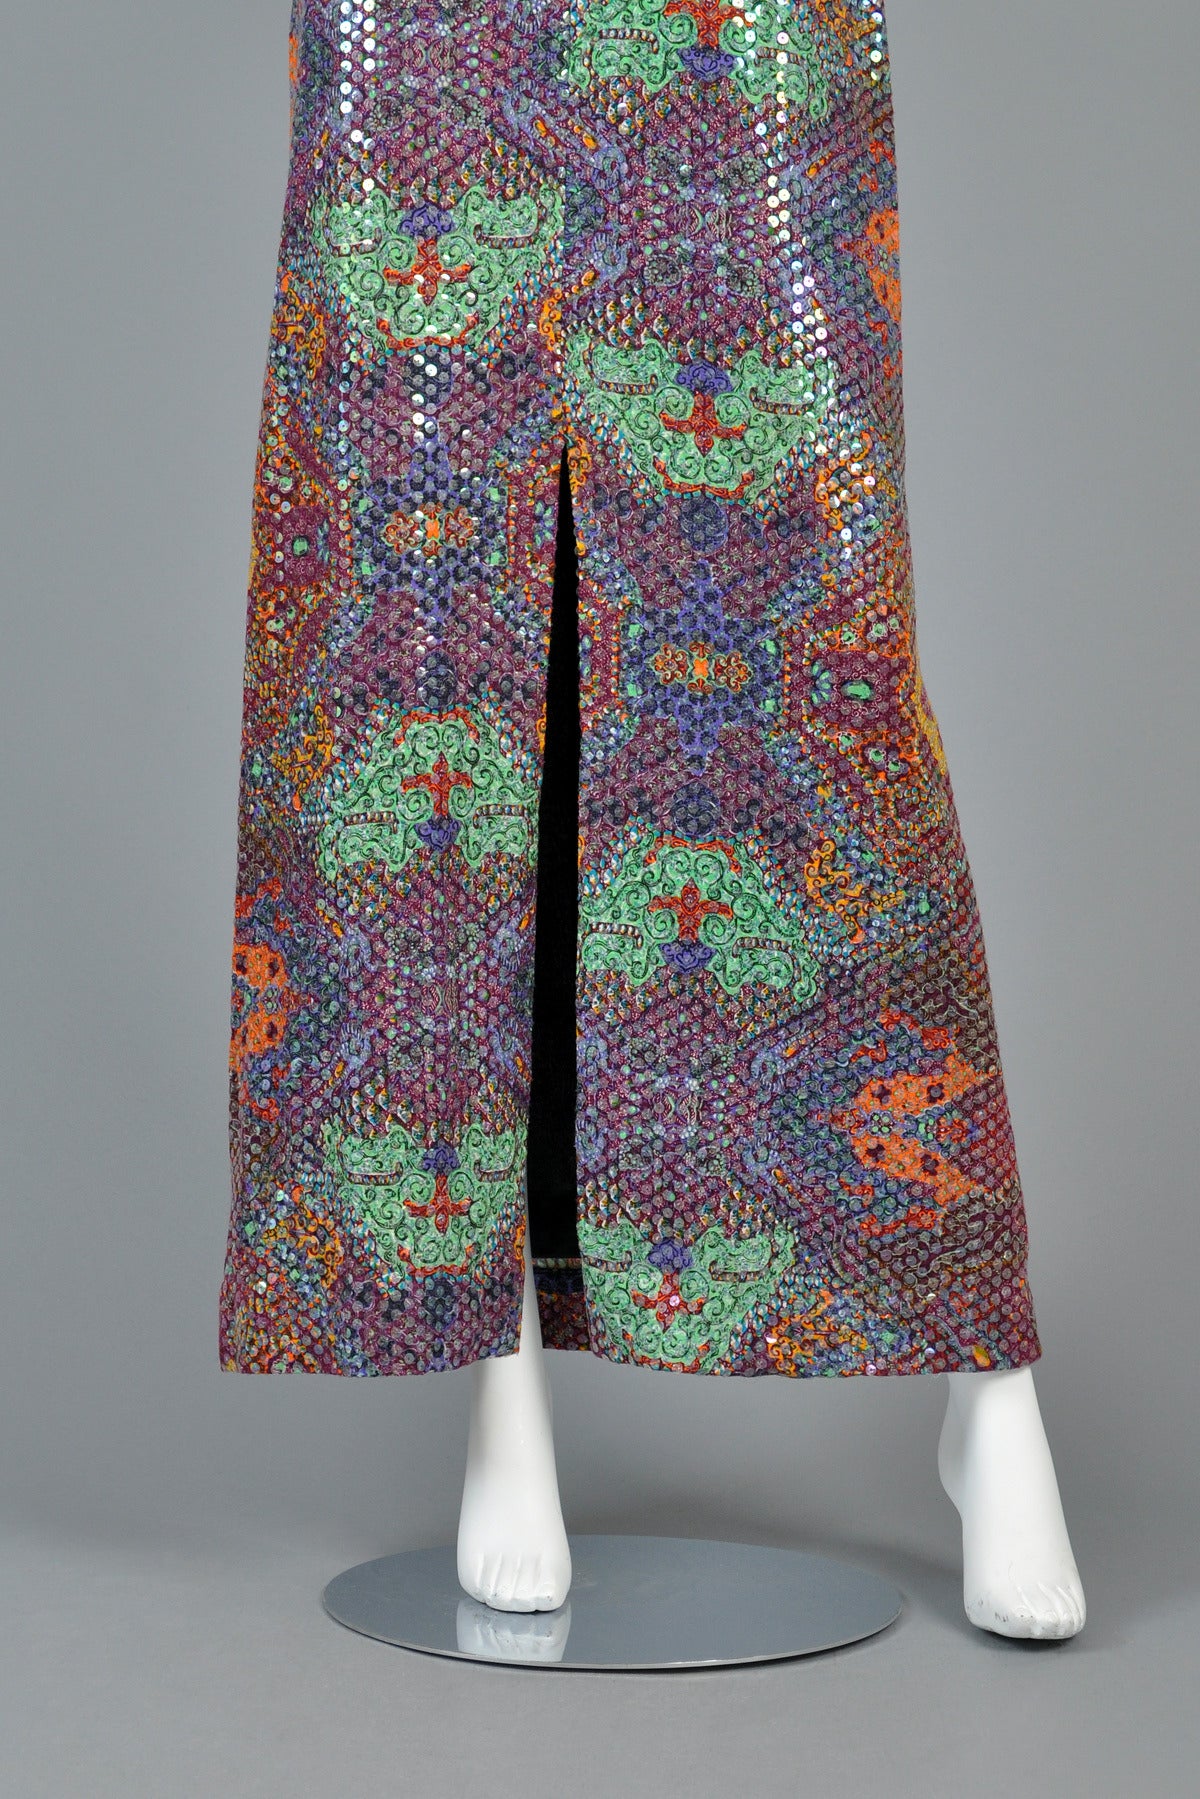 Women's Malcolm Starr 1970s Graphic Sequin Maxi Dress